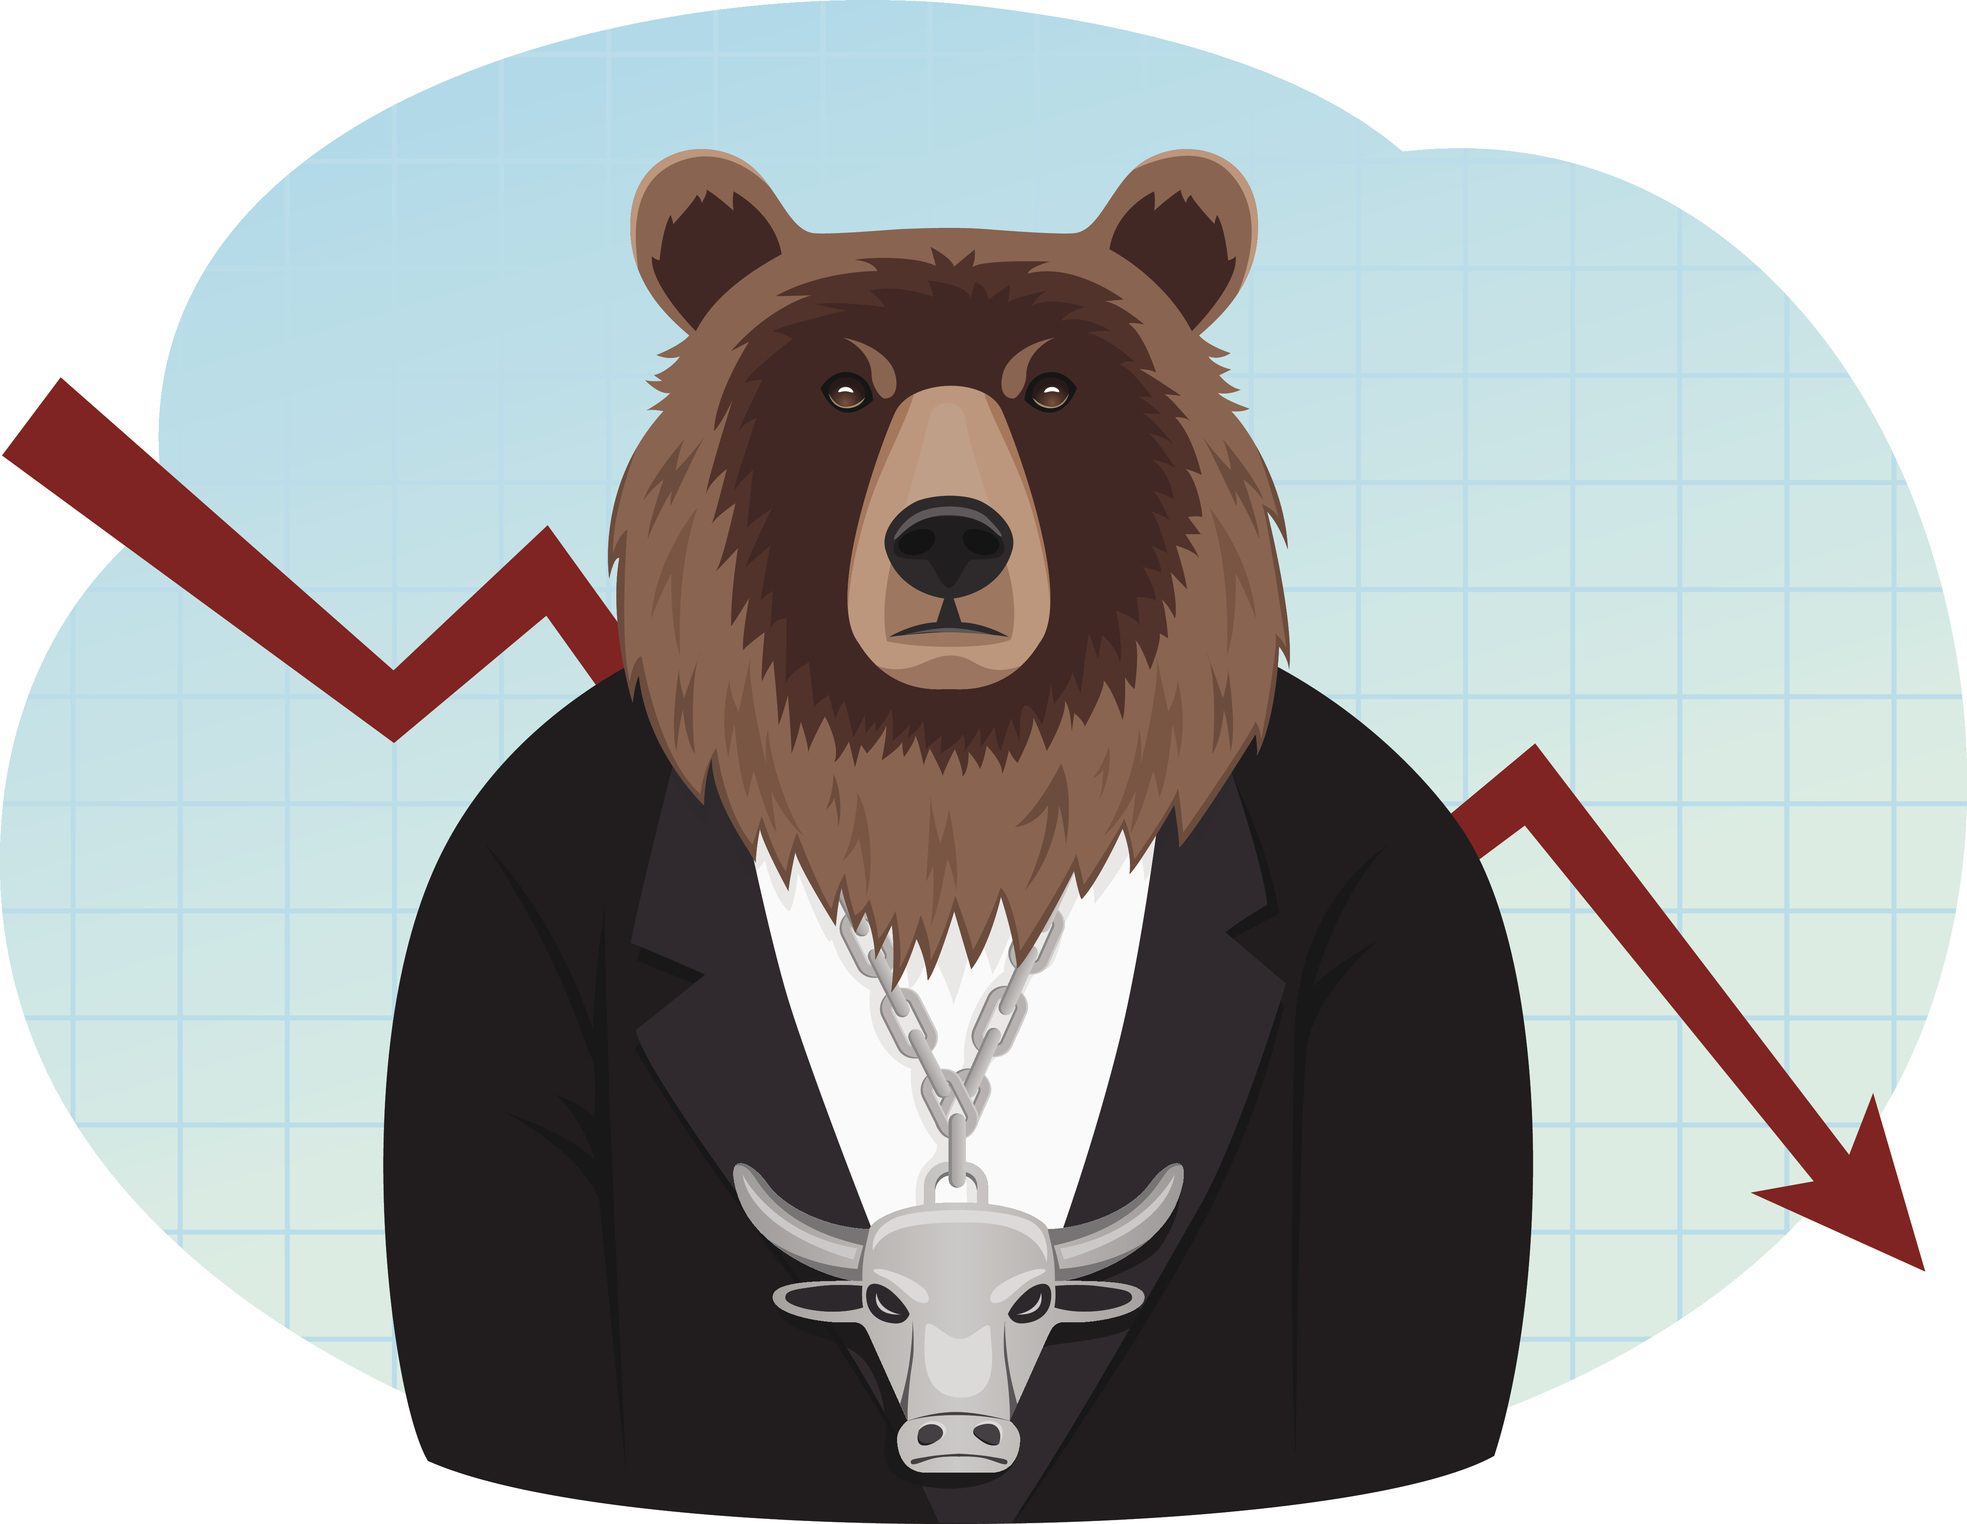 Bär im Anzug steht vor sinkendem Kurs Börsencrash Crash an der Börse